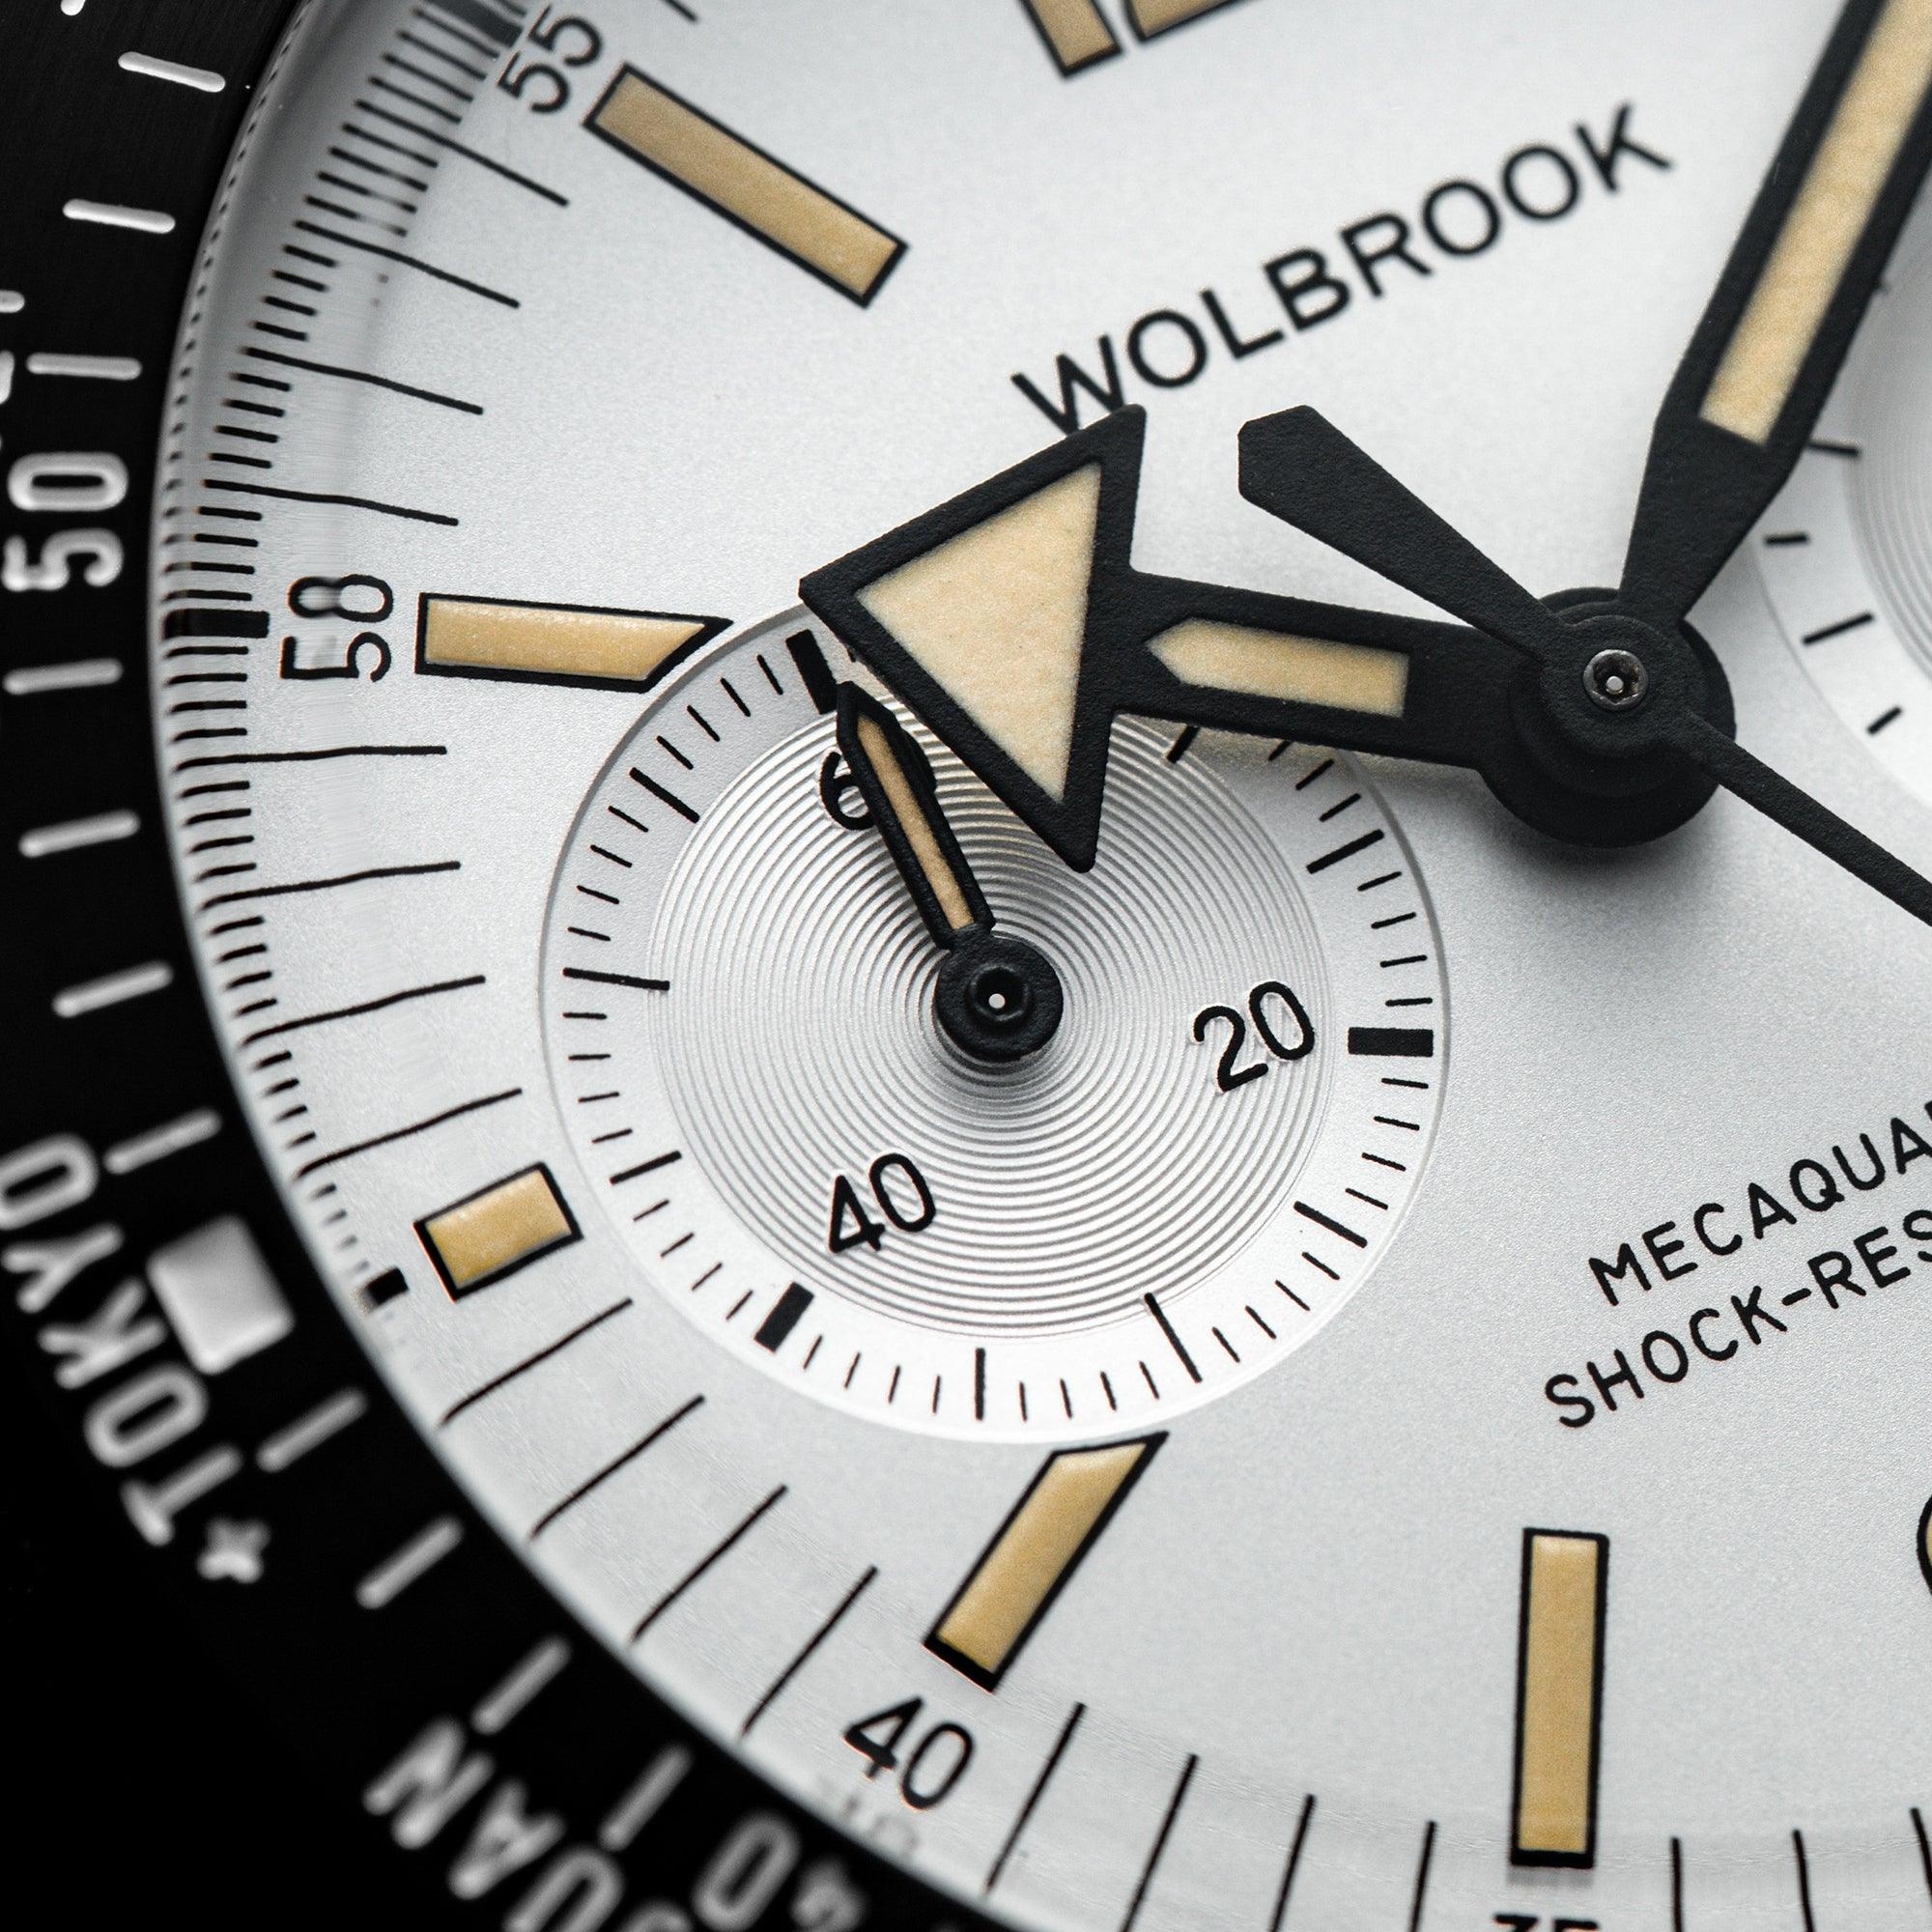 Skindiver WT Chrono-Mecaquartz Black Bezel Vintage White Chronograph - Wolbrook Watches